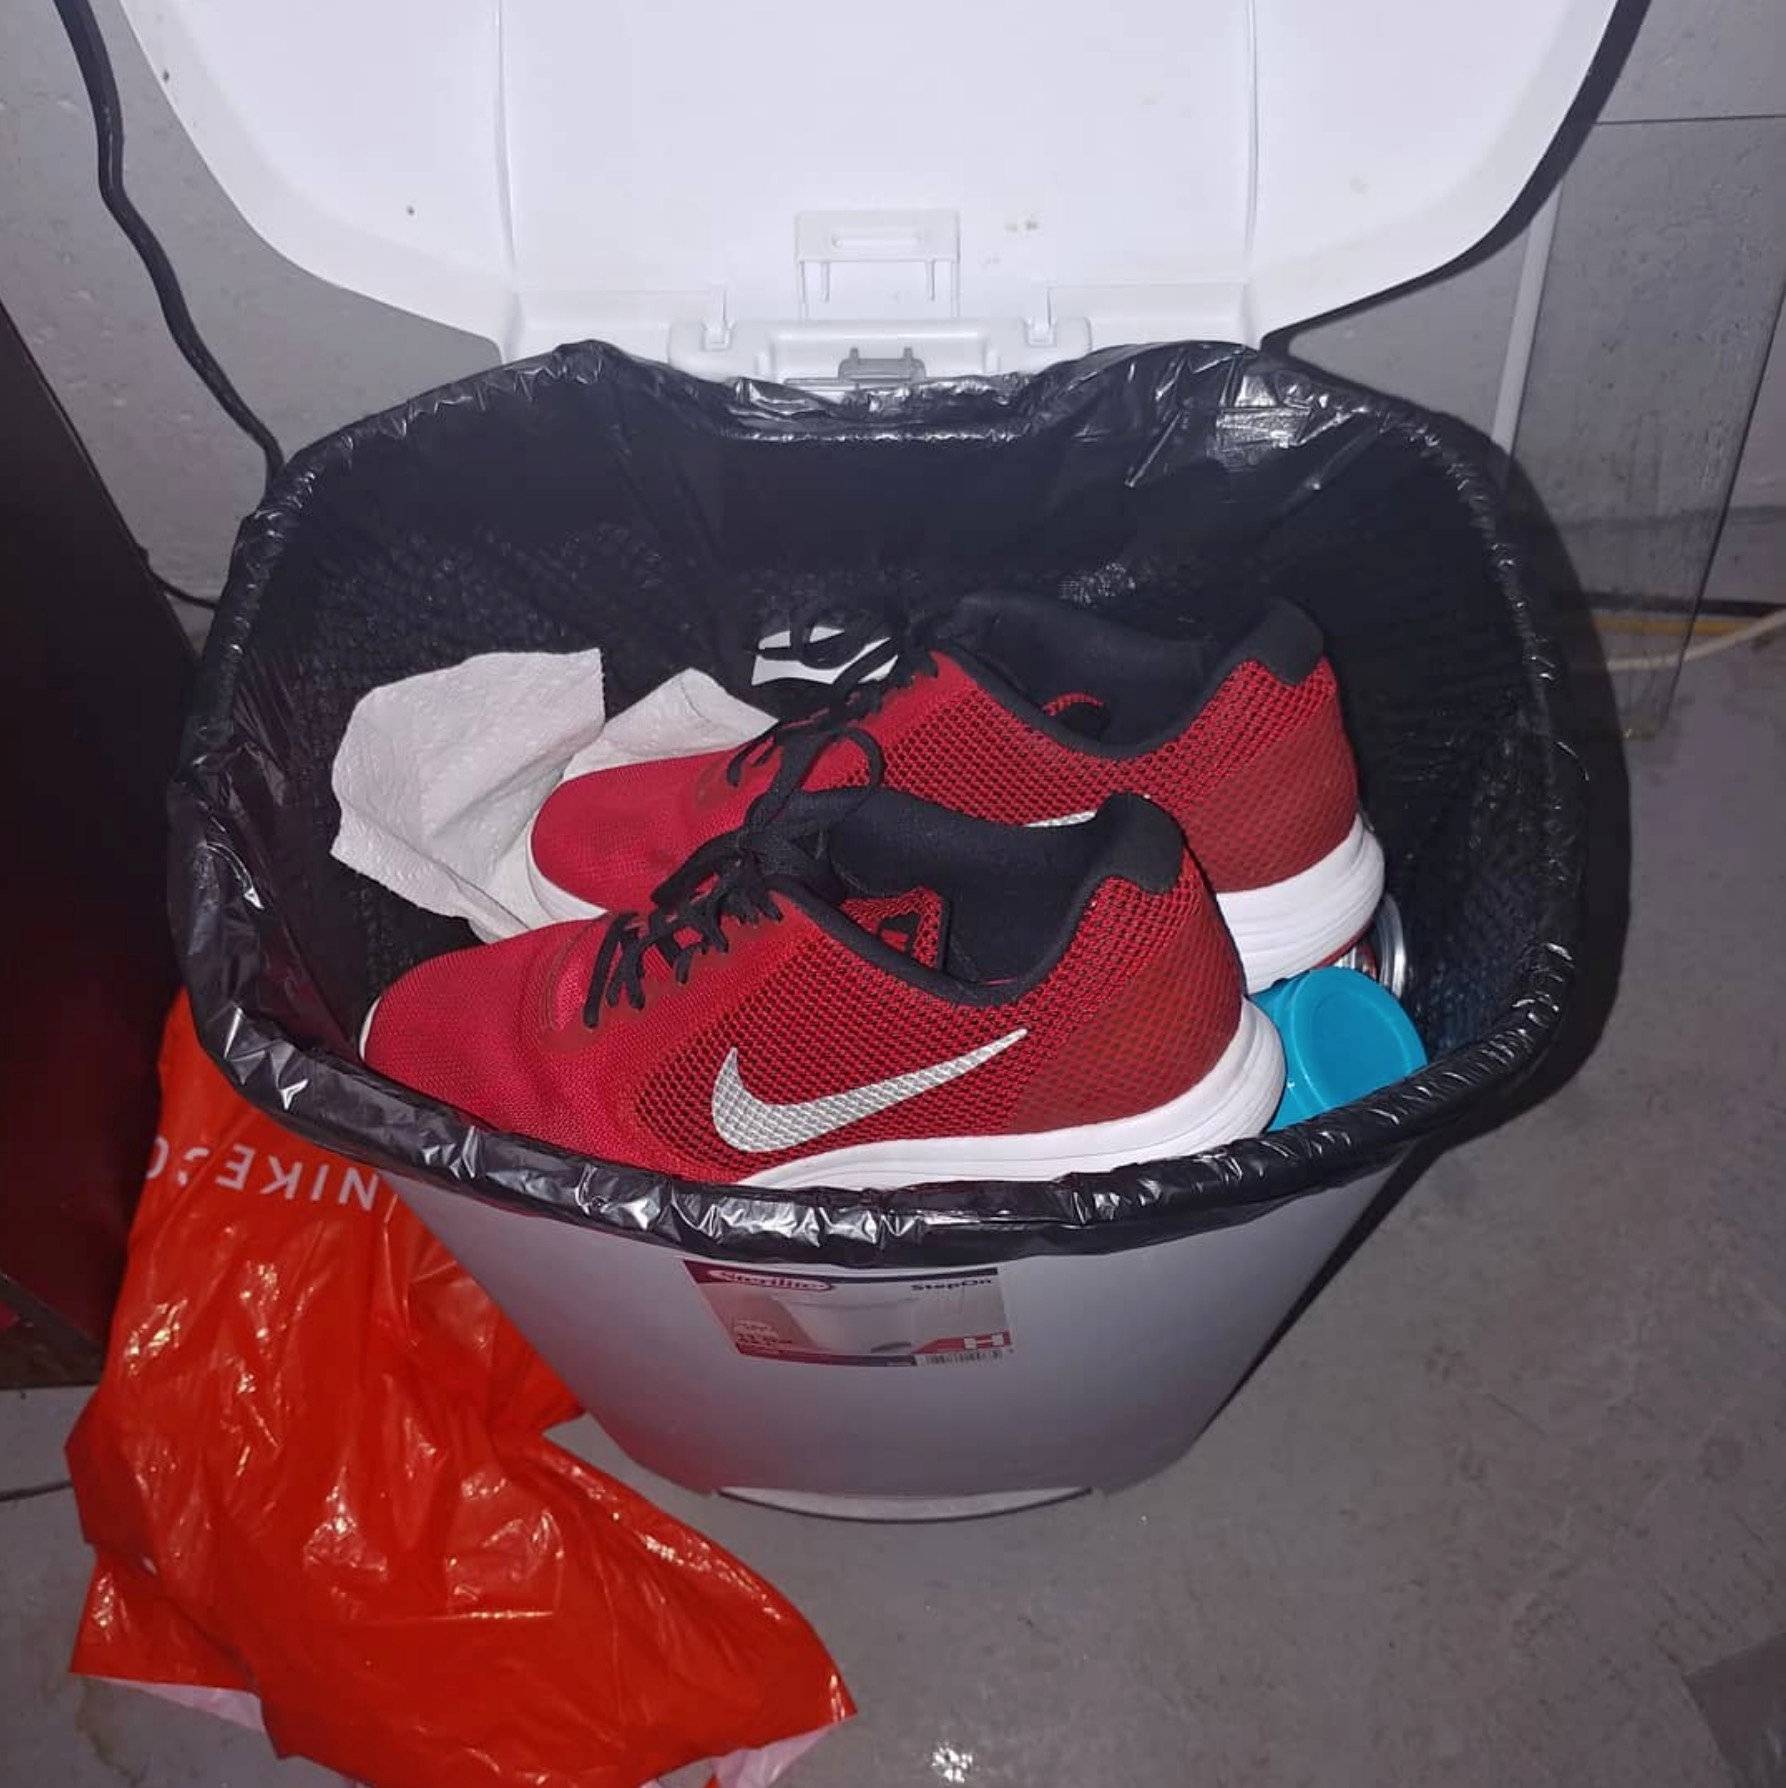 Nike sneakers are seen in the garbage bin in Oklahoma